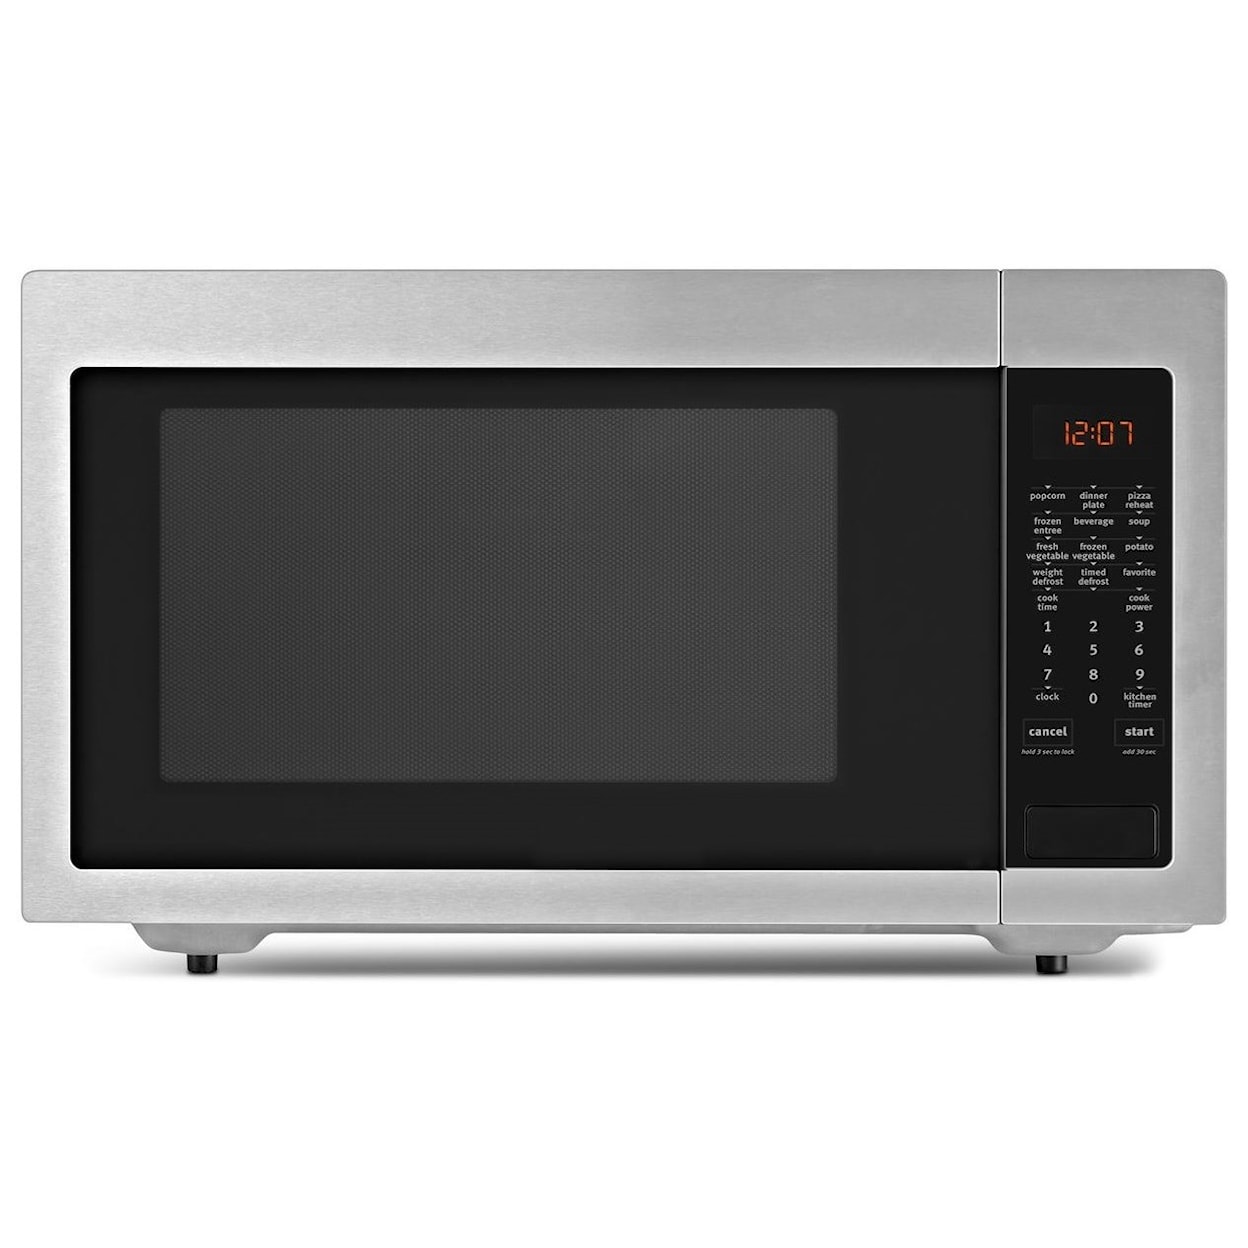 Jenn-Air Microwaves 2.2 Cu. Ft. Countertop Microwave